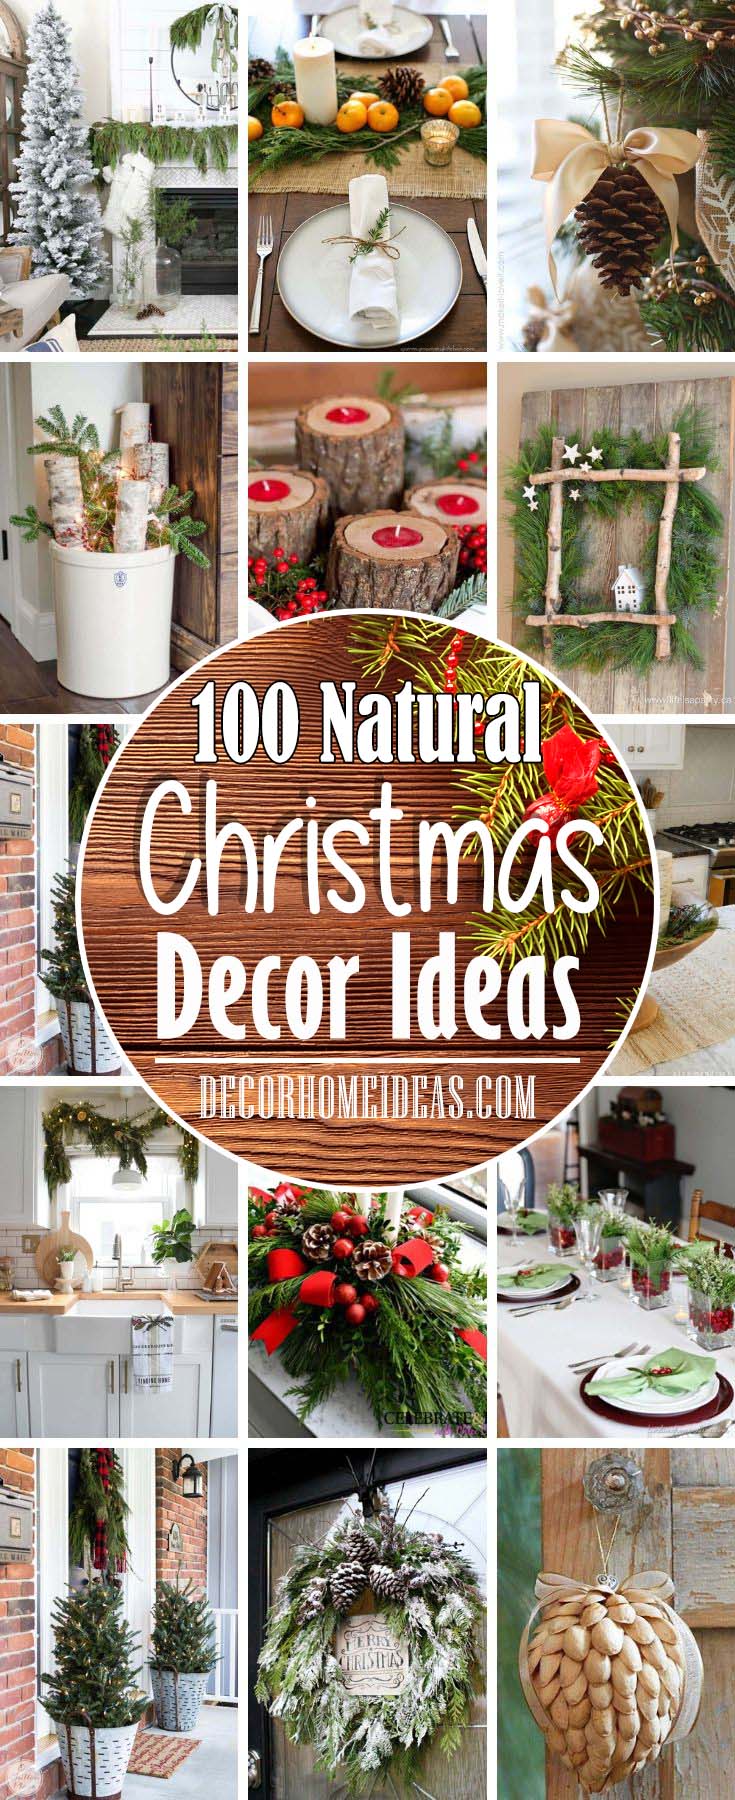 Natural DIY Christmas Decor Ideas #Christmas #diy #natural #decorhomeideas